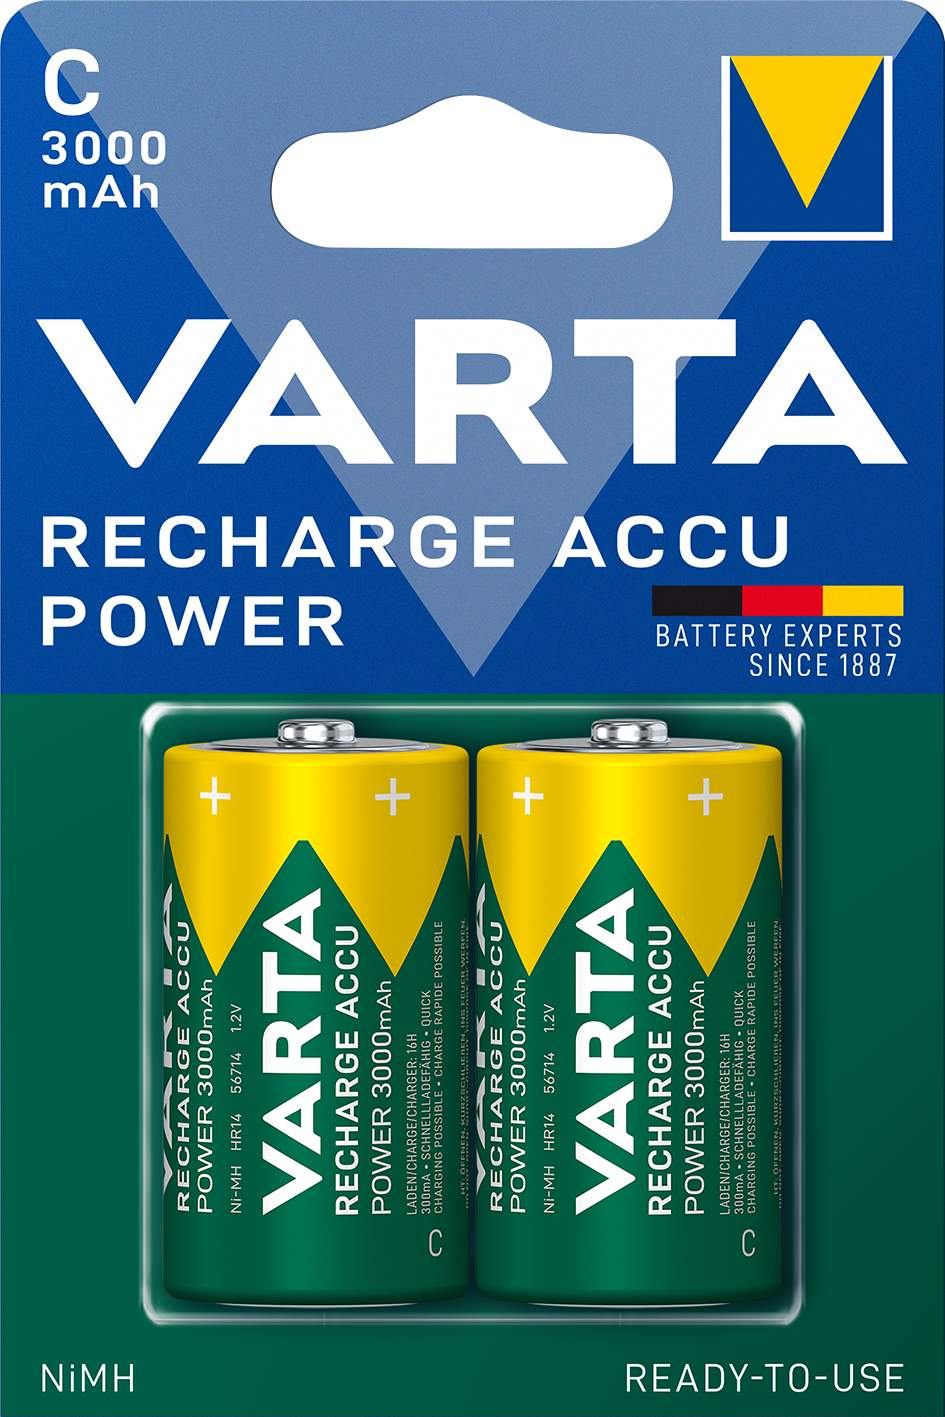 VARTA RECHARGE ACCU POWER C 3000MAH PAR 2